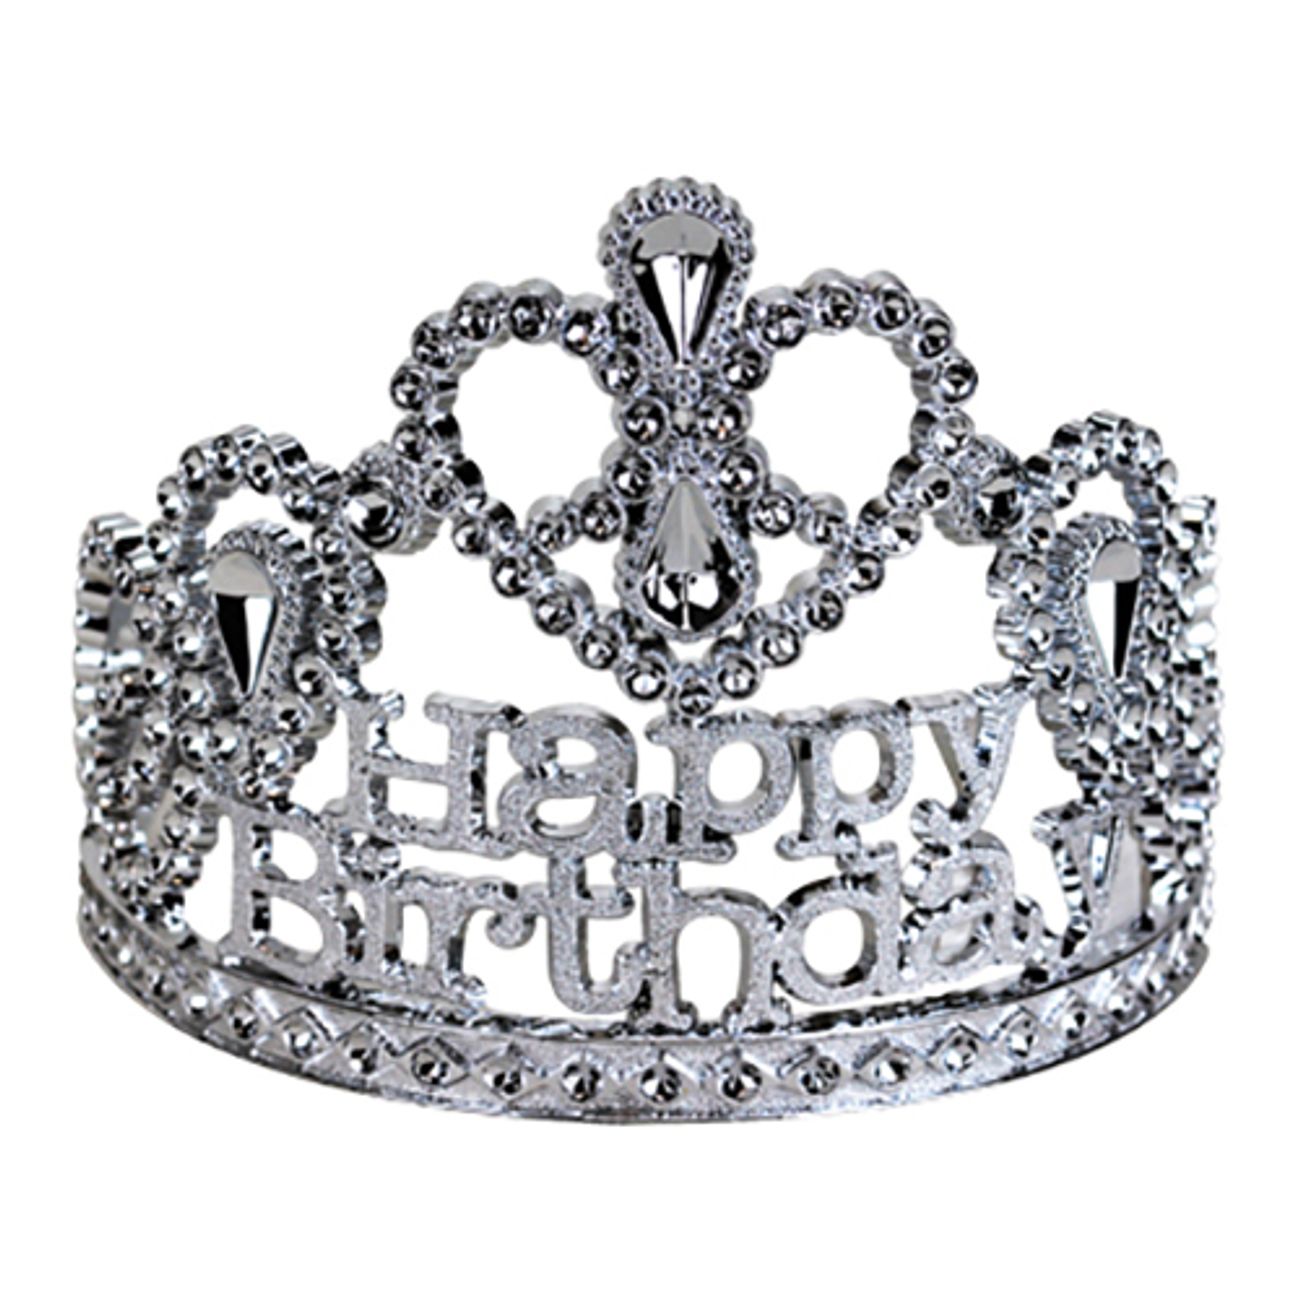 happy-birthday-tiara-1